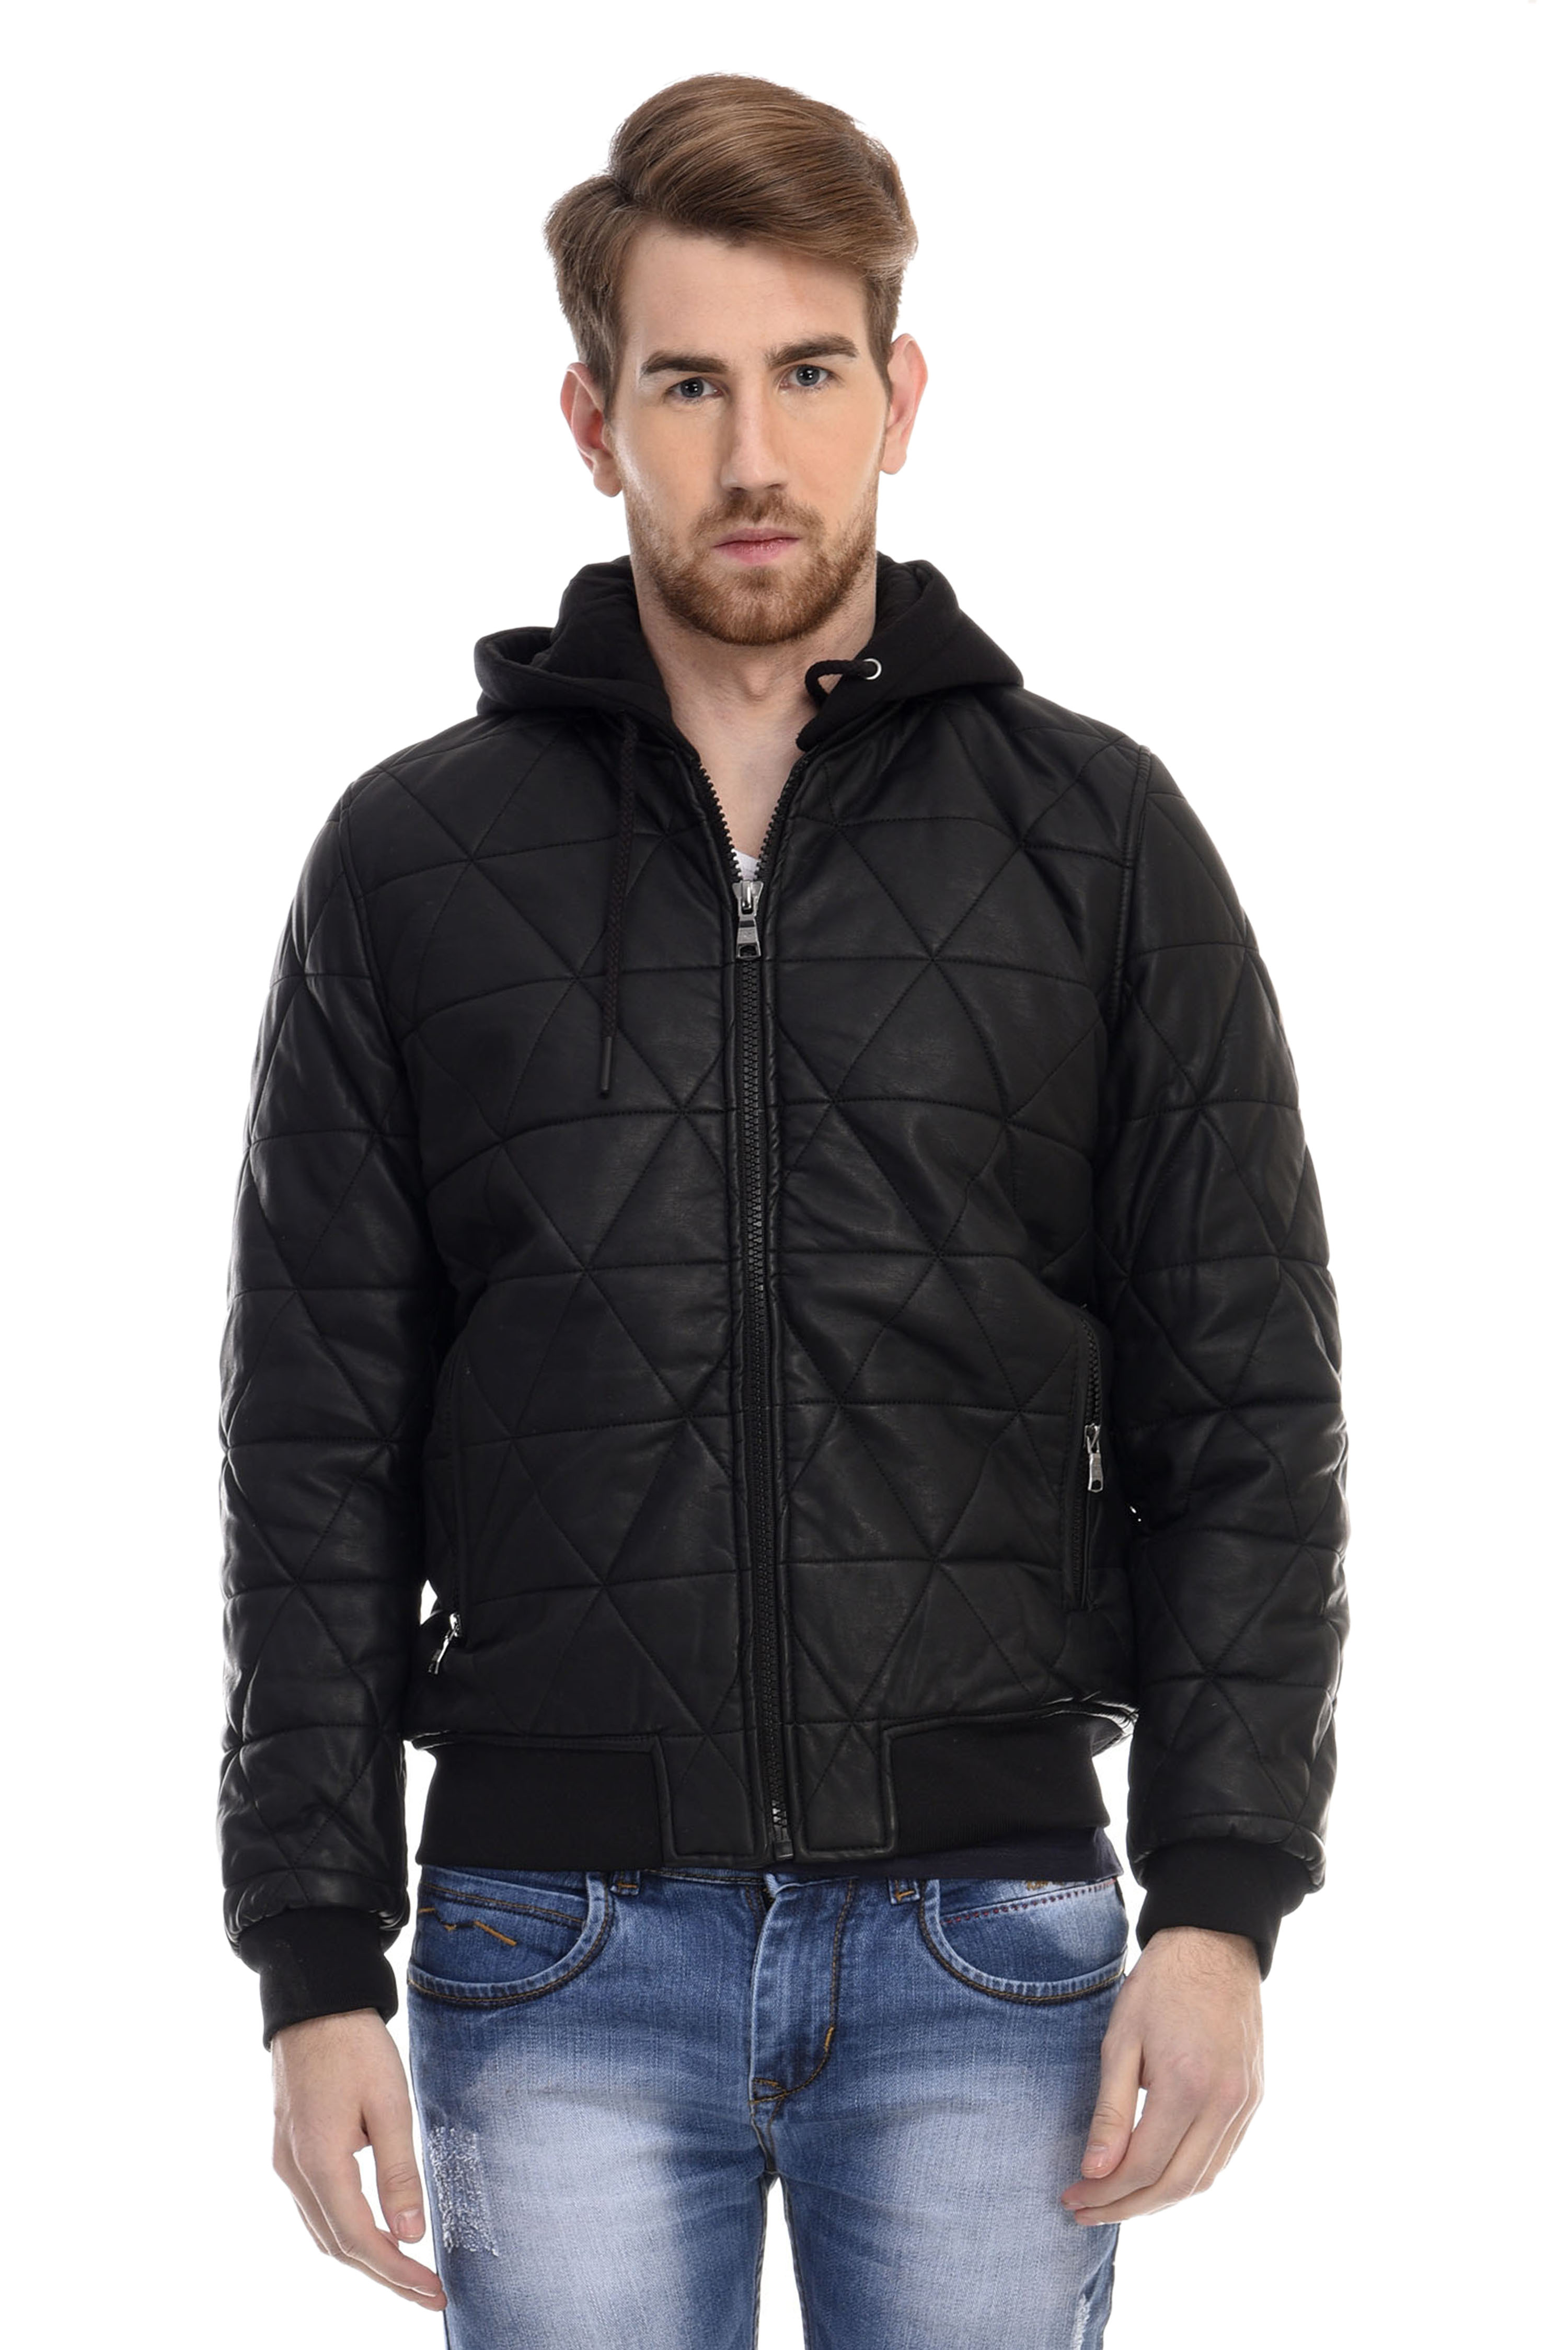 Buy Celio Black Long Sleeve Jacket For Men Online @ ₹2999 from ShopClues